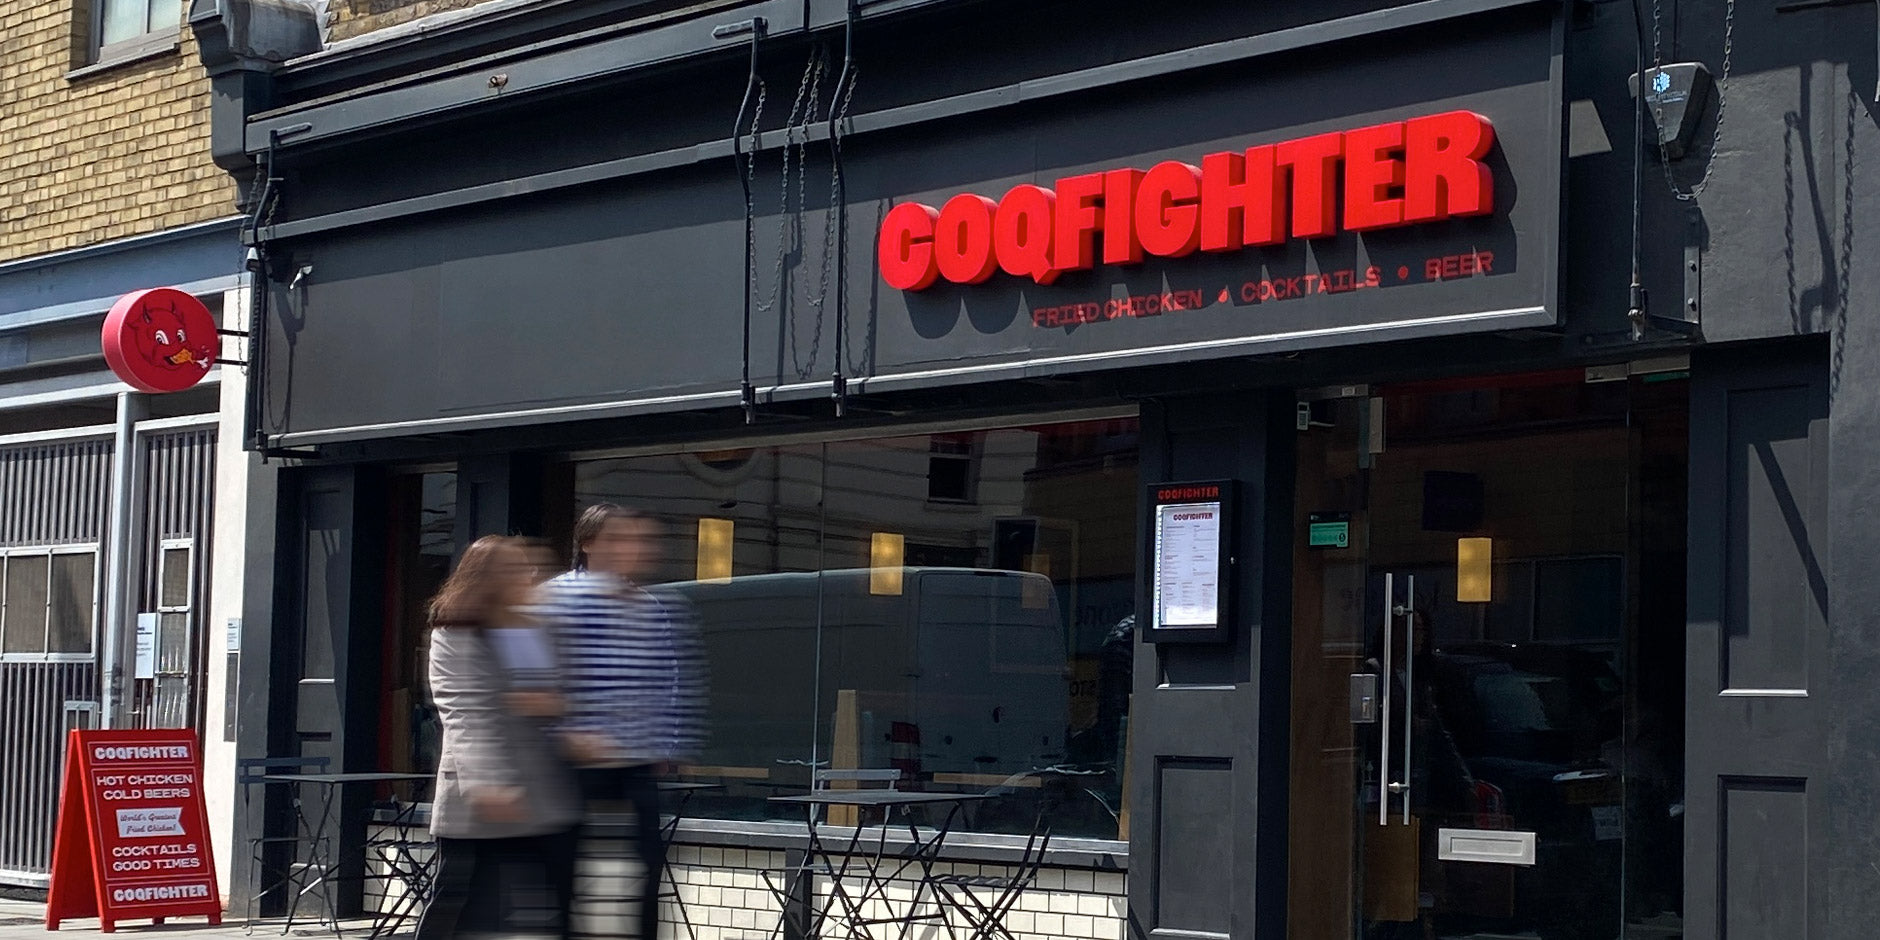 Coqfighter Restaurant Signage